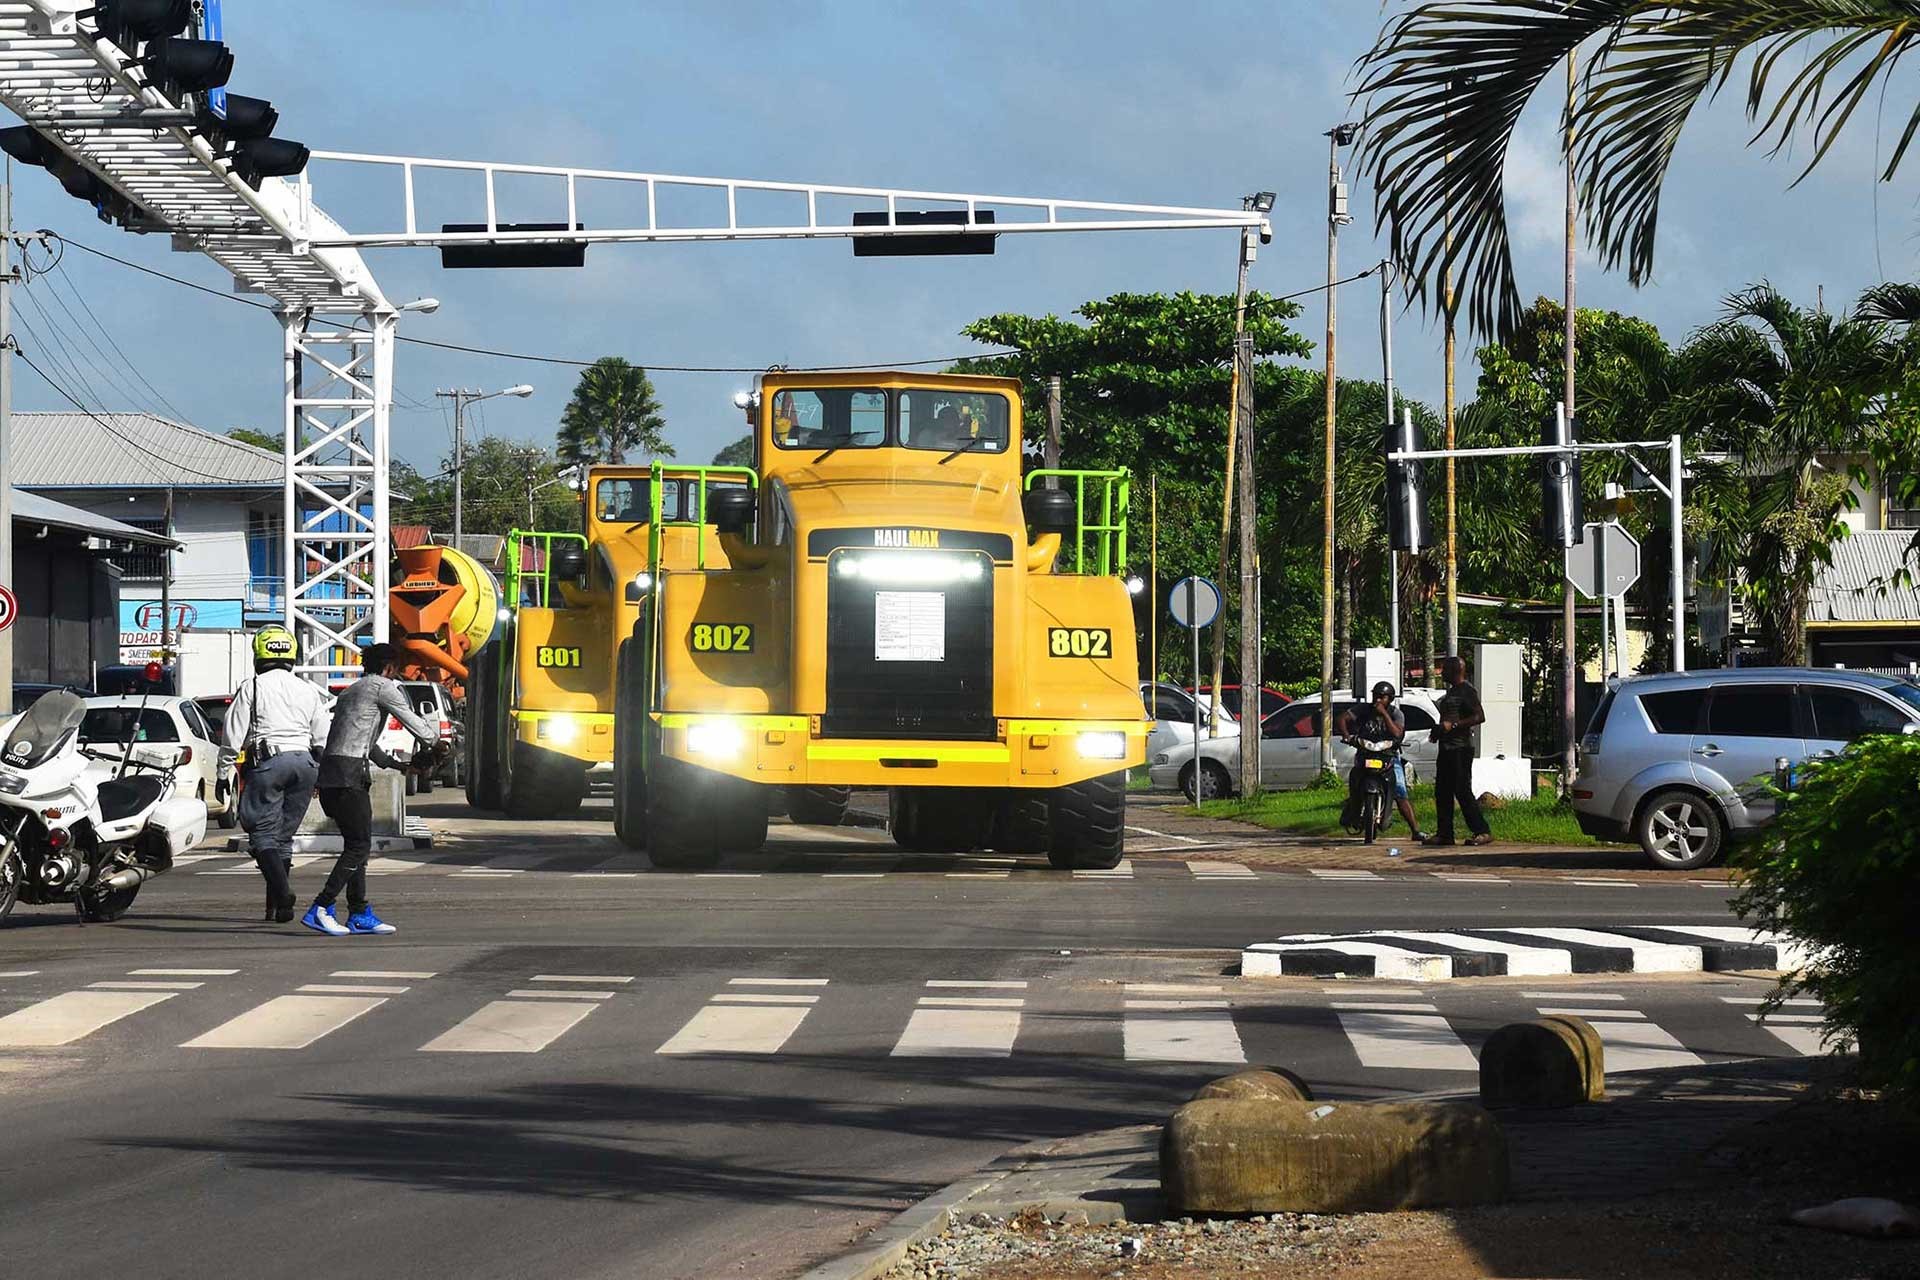 Elphinstone Haulmax truck arrived in Suriname